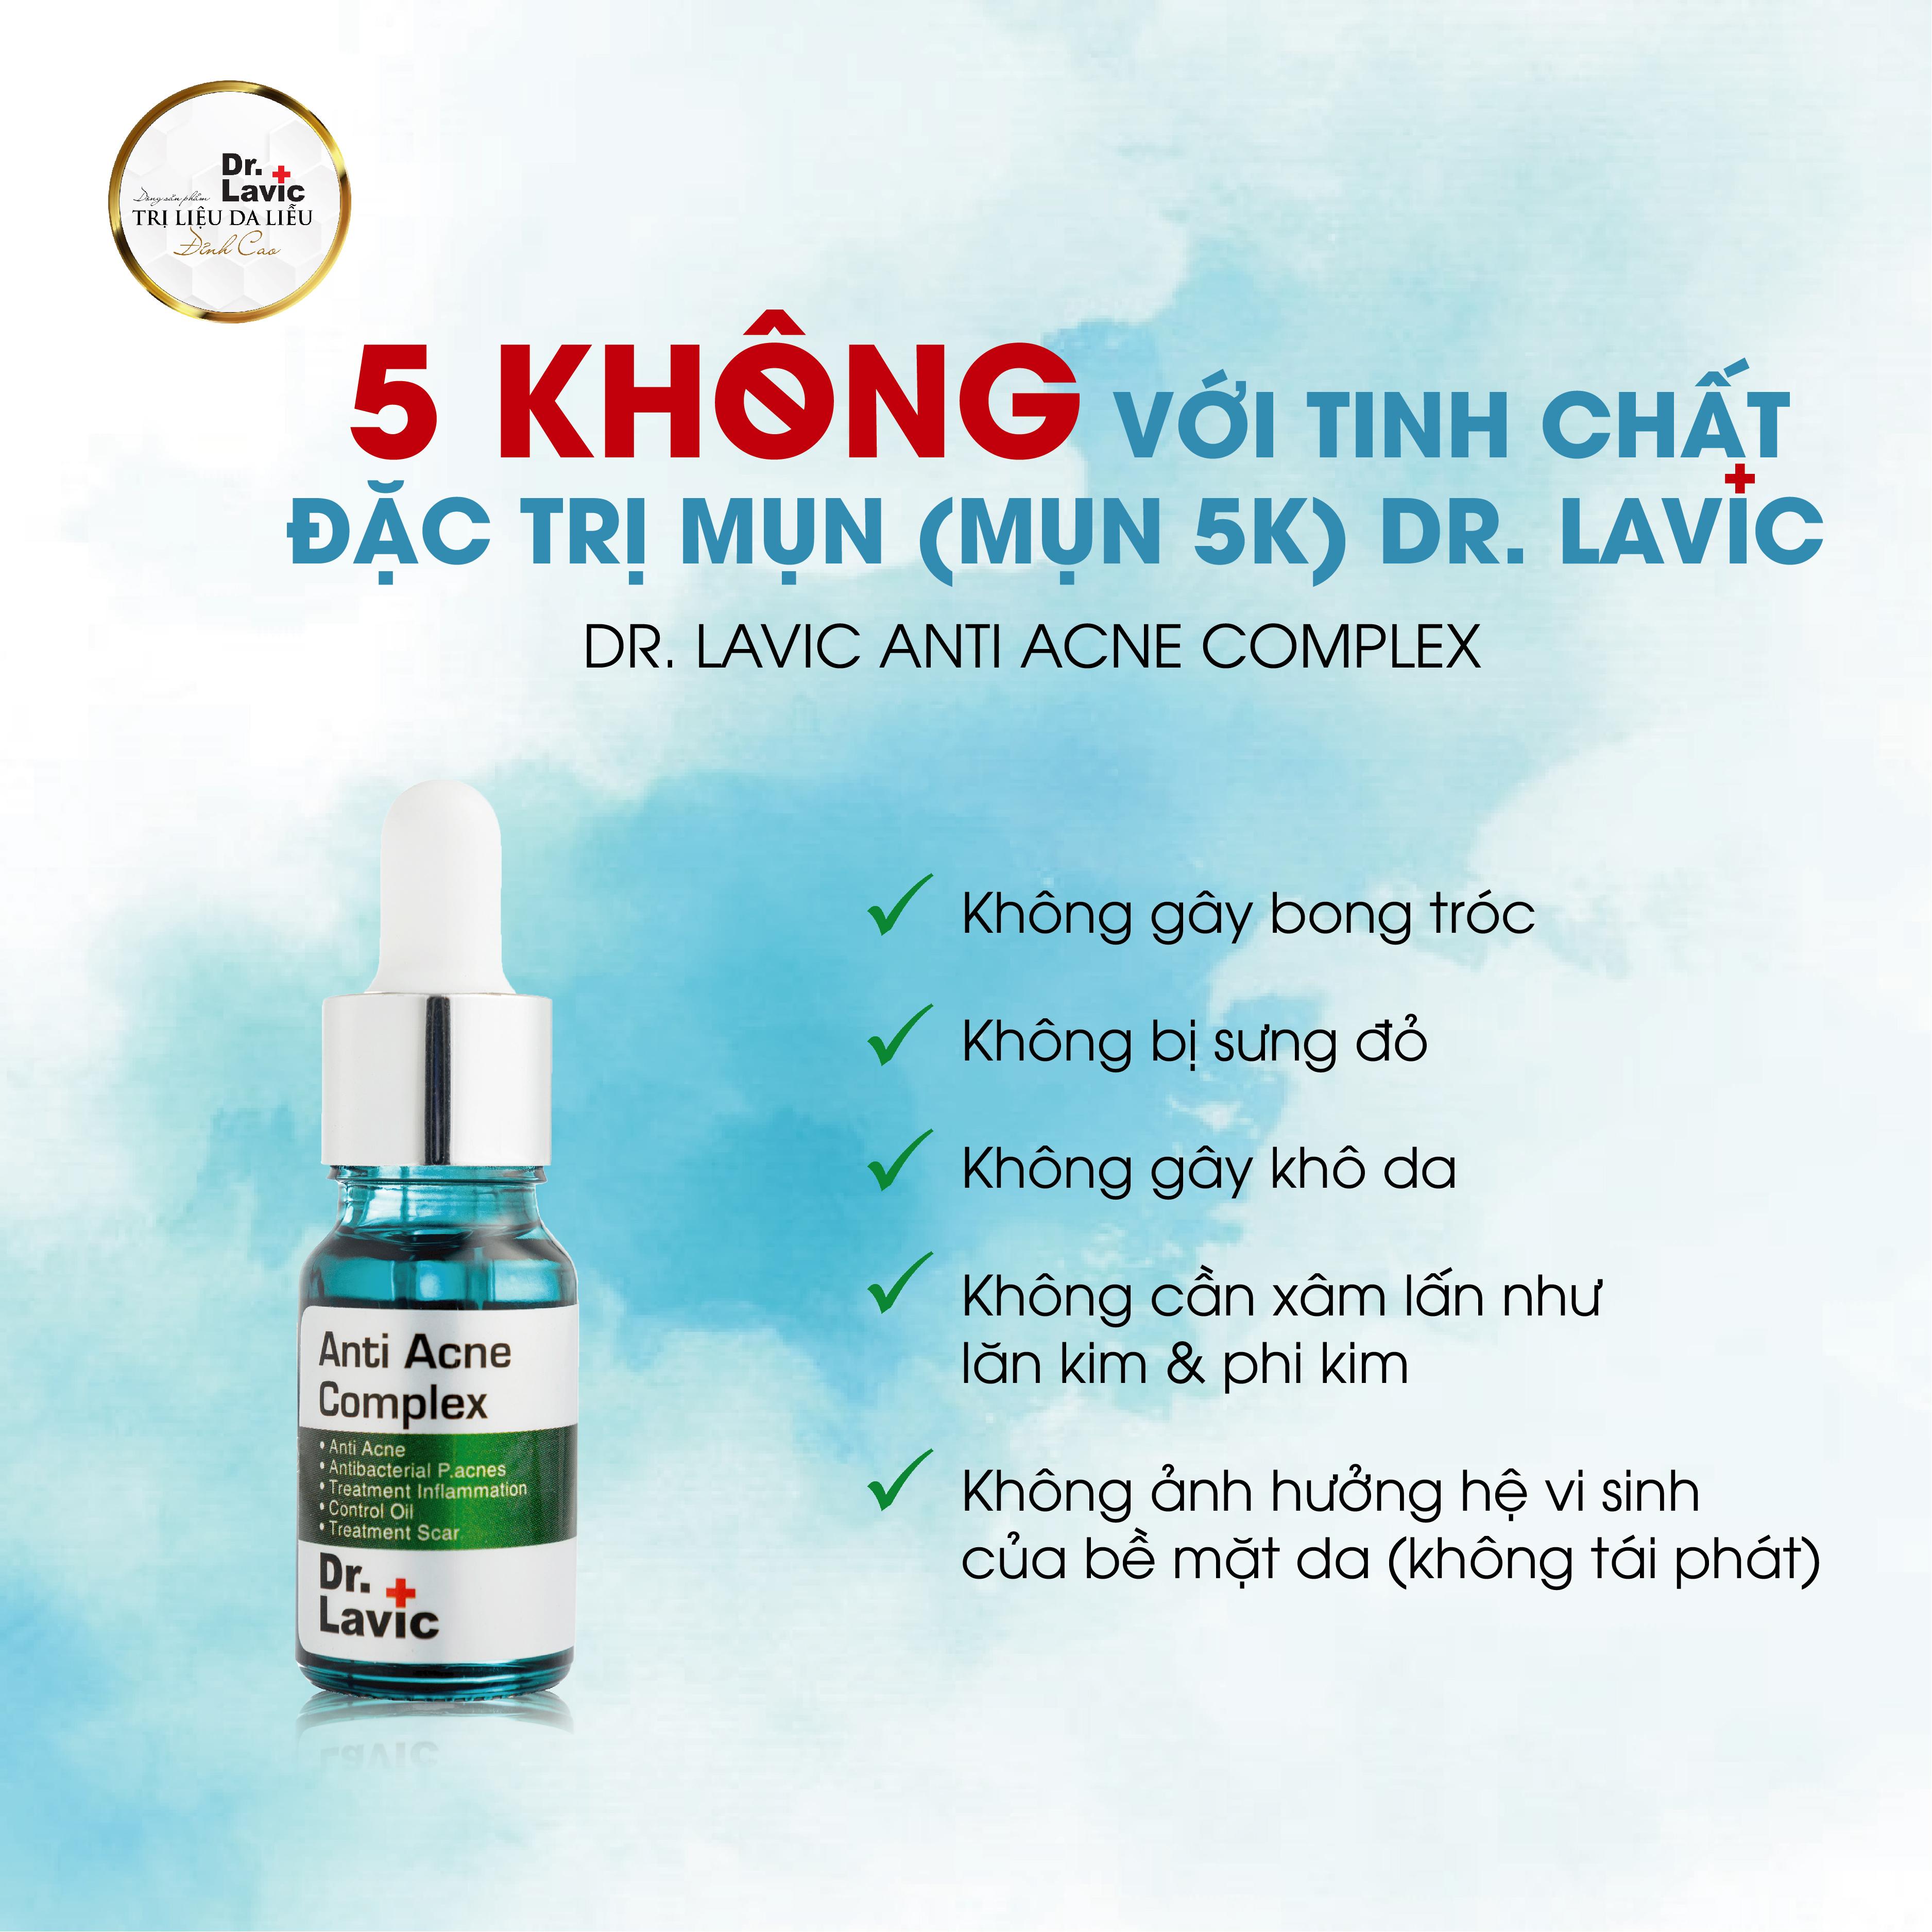 SERUM MỤN 5K DR.LAVIC - Dr.Lavic Anti acne complex - Sản phẩm trị mụn |  MuaDoTot.com